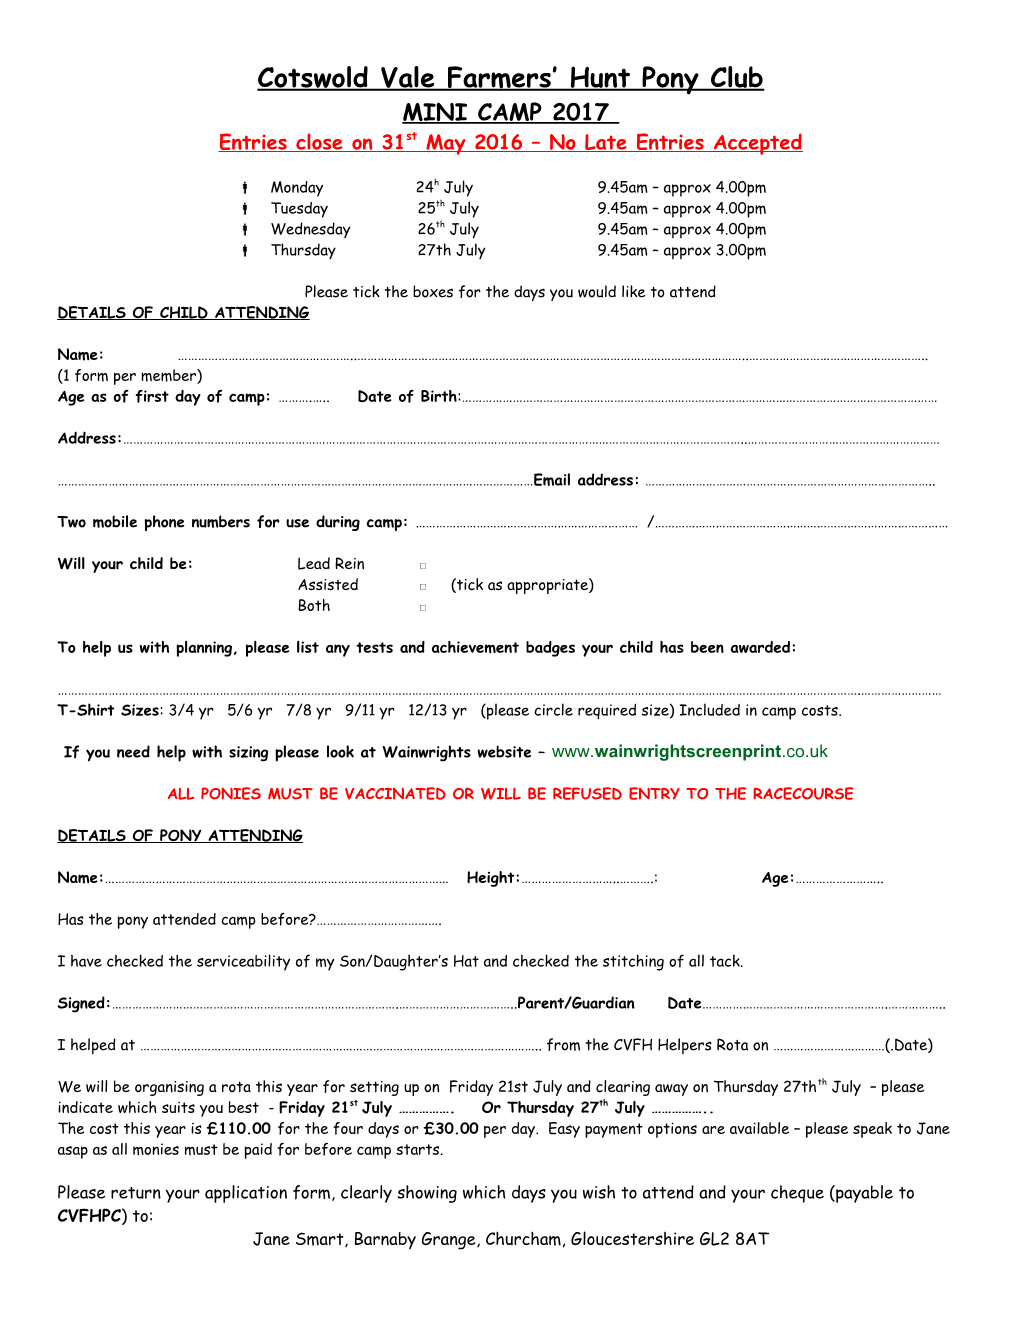 JUNIOR CAMP 2008 Application Form